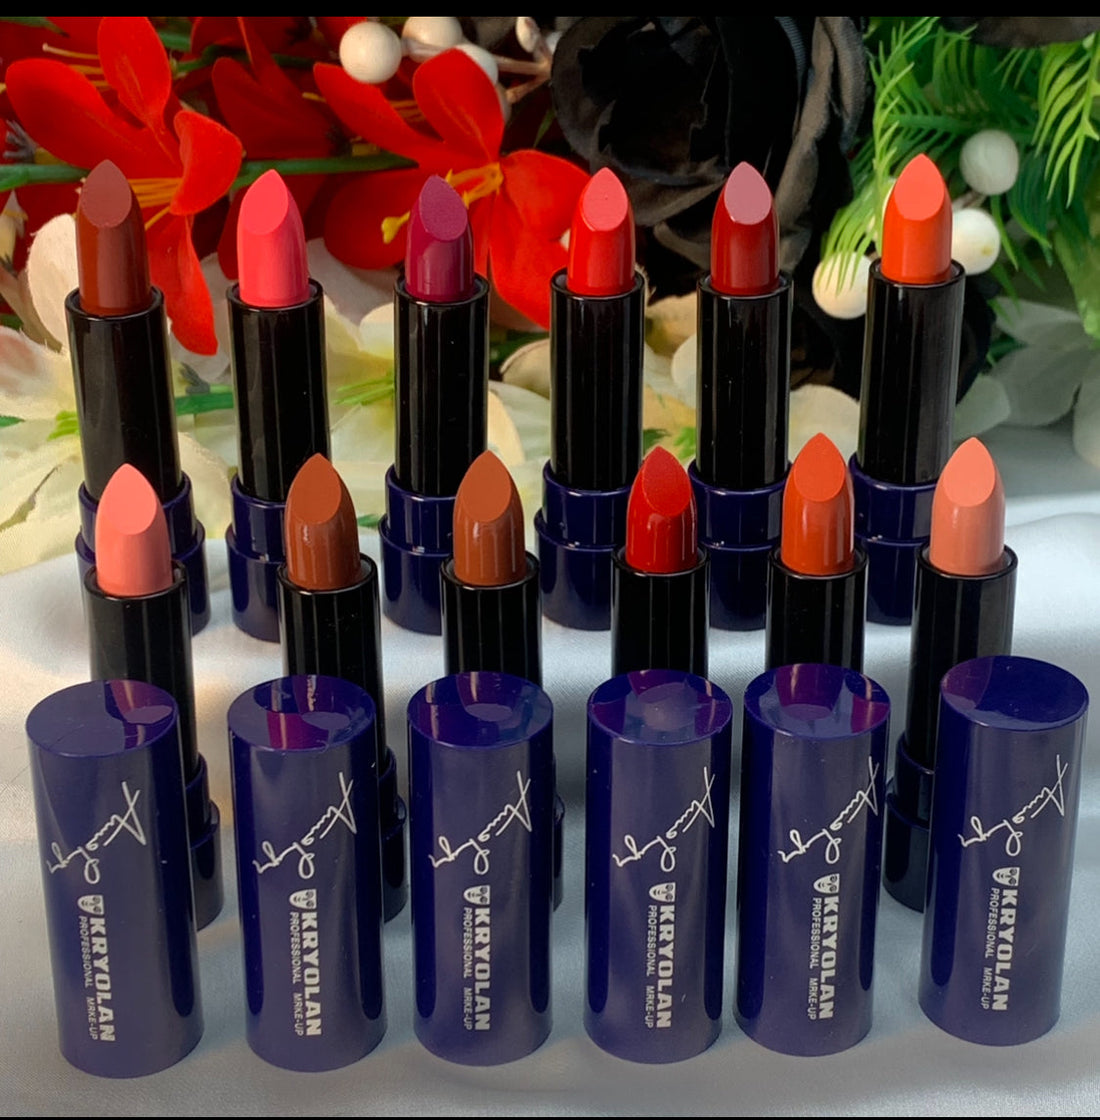 Kryolan lipsticks Shadez|Formula |Colors Range |Names